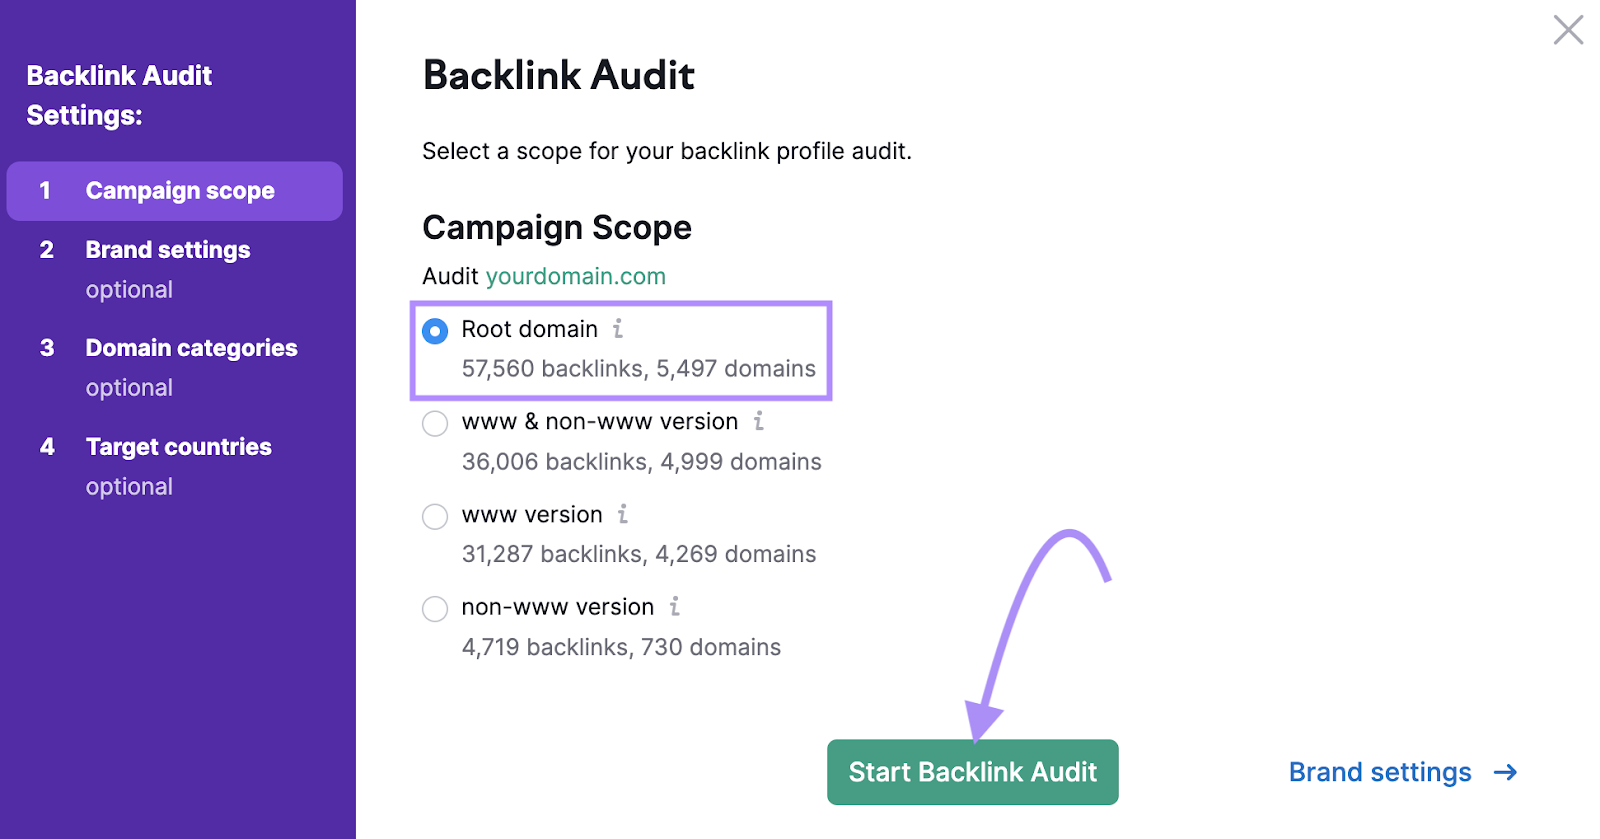 Backlink Audit tool settings window